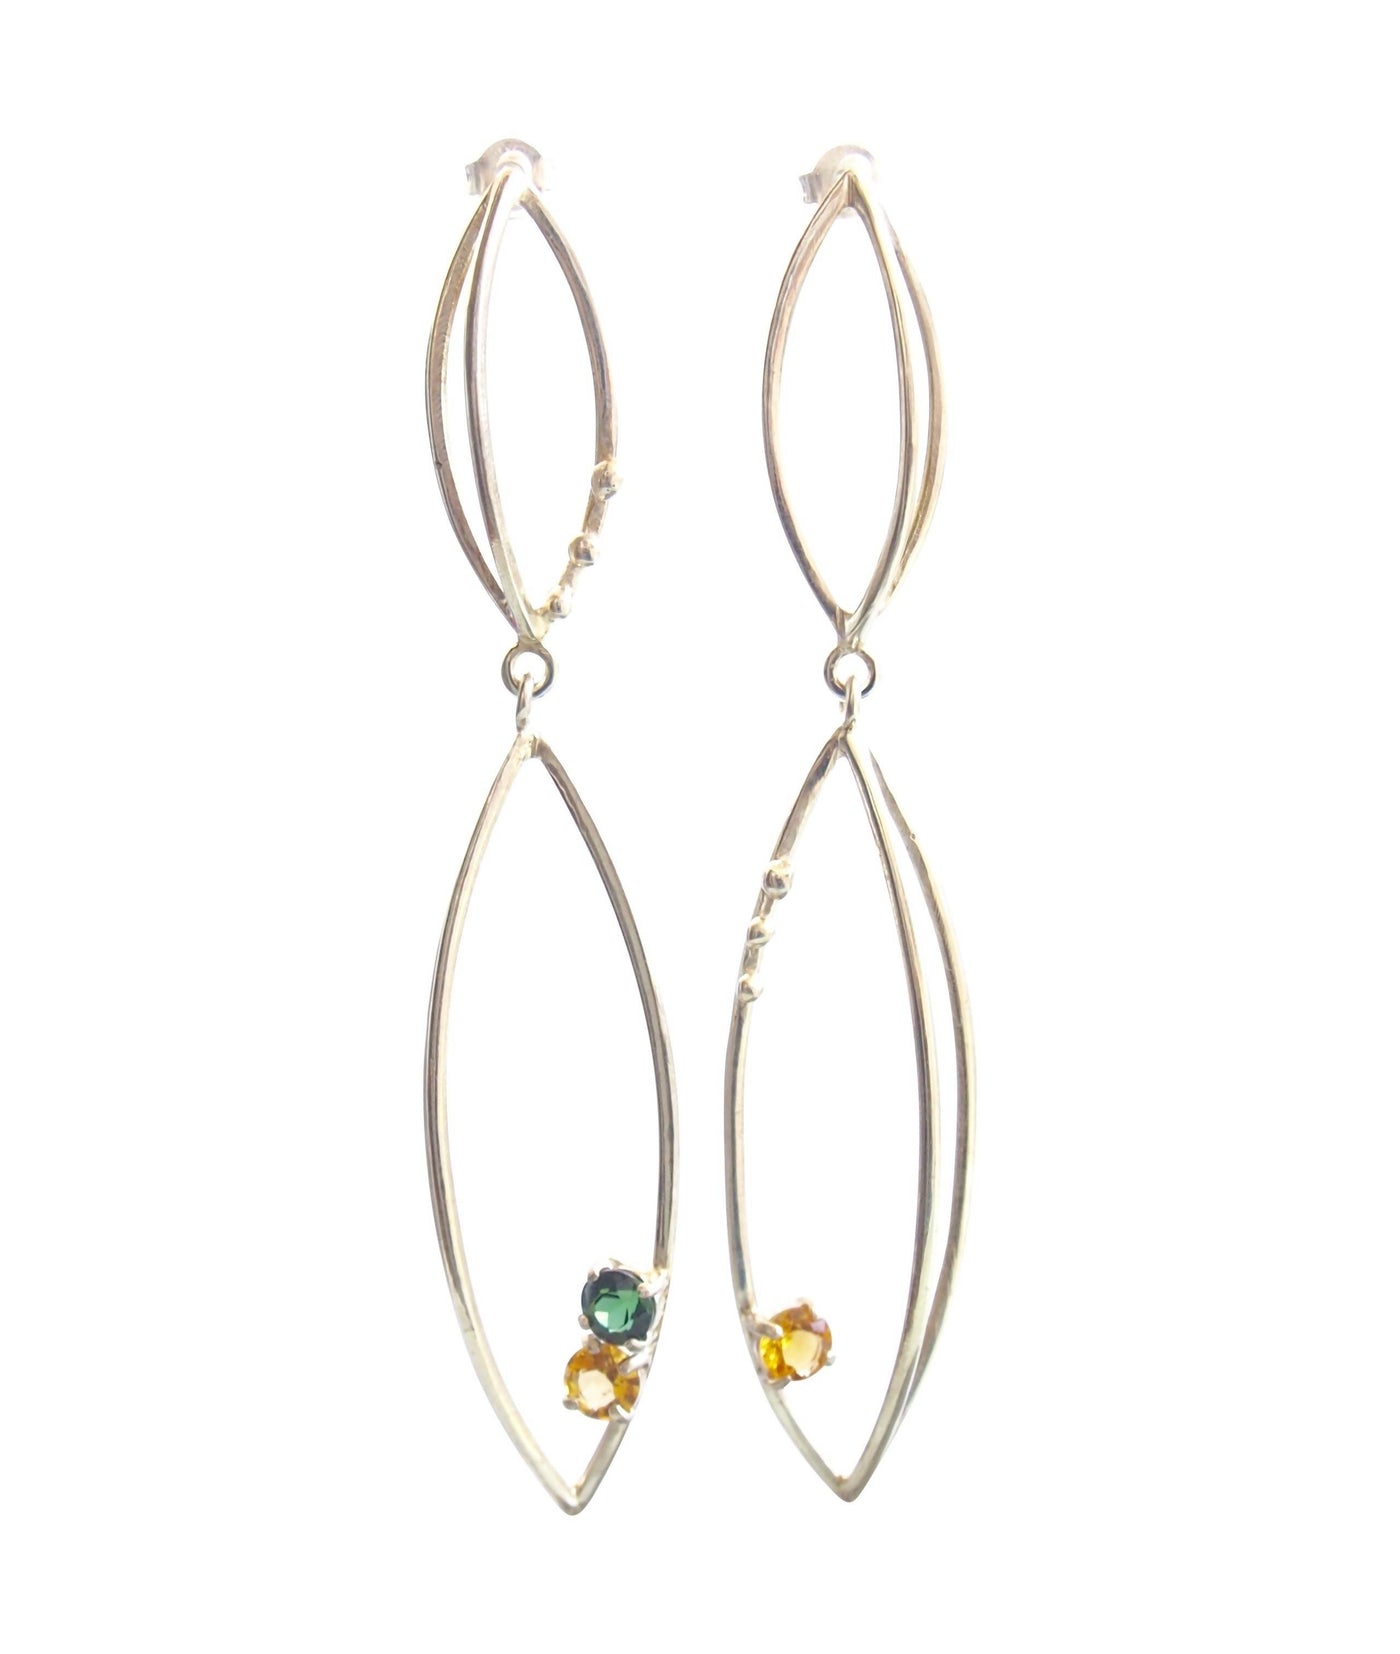 3d earrings with gemstones - Image 3